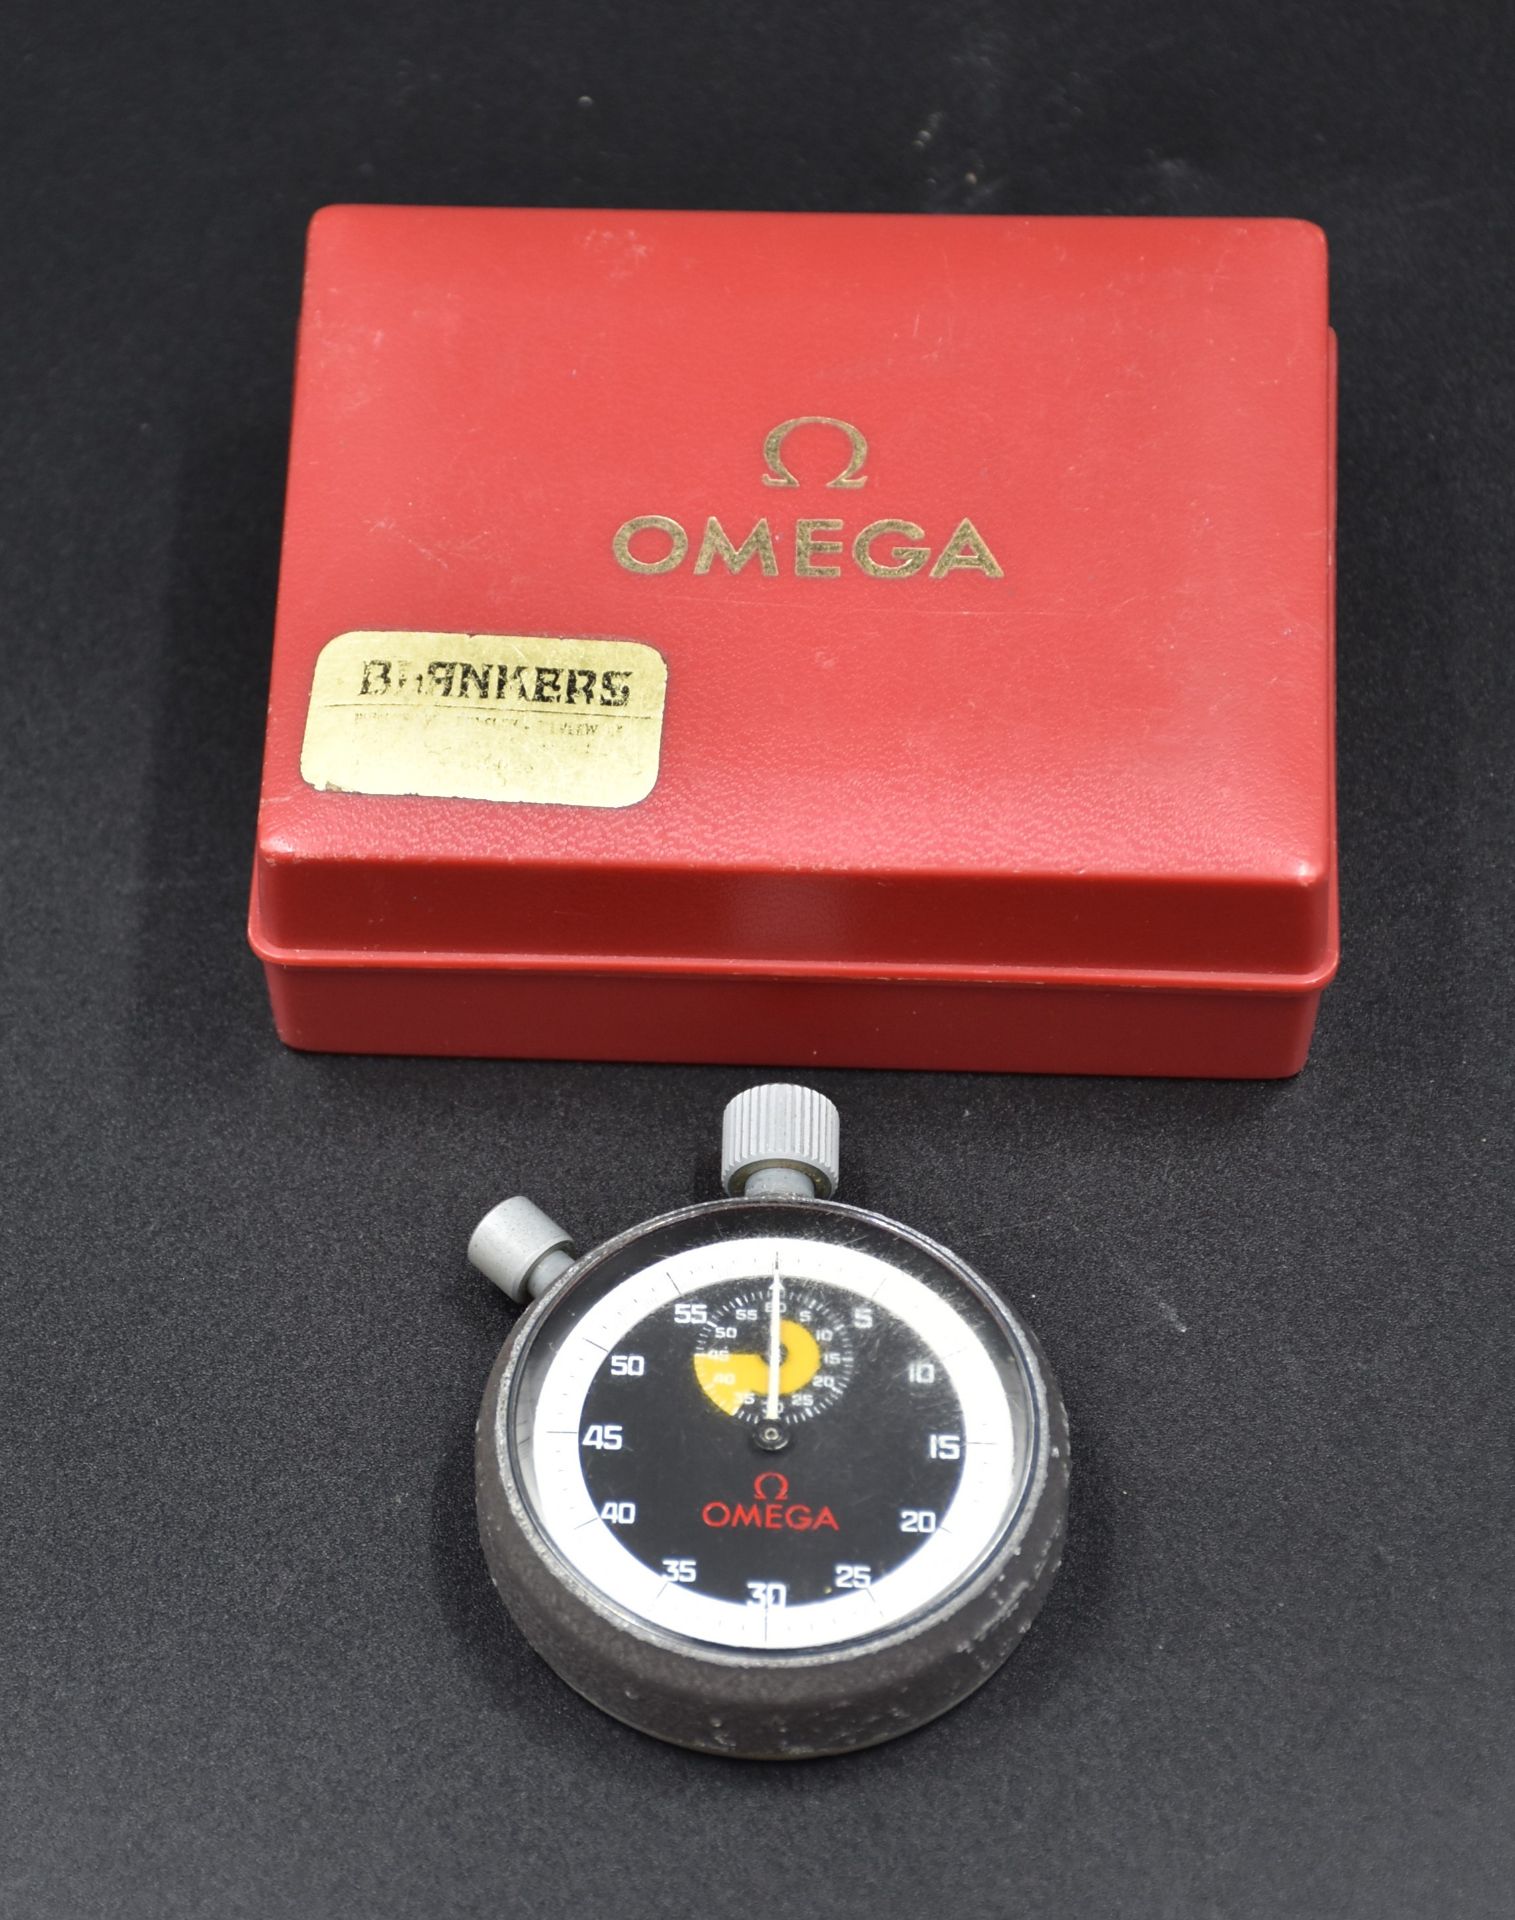 Omega chronometer in its box. Circa 1970.